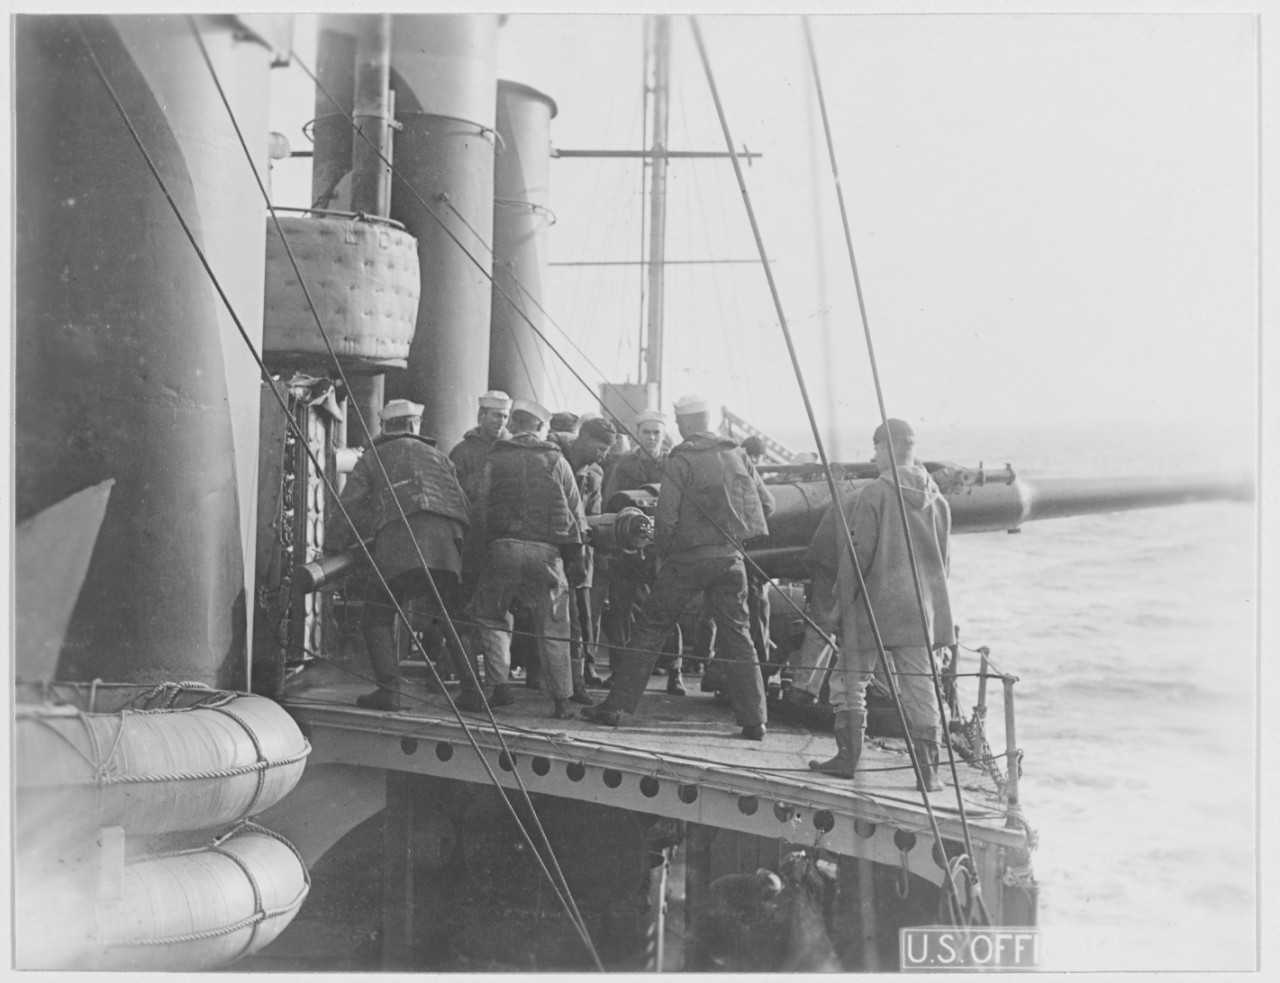 View of gun crew at practice on USS LITTLE, November 24, 1918